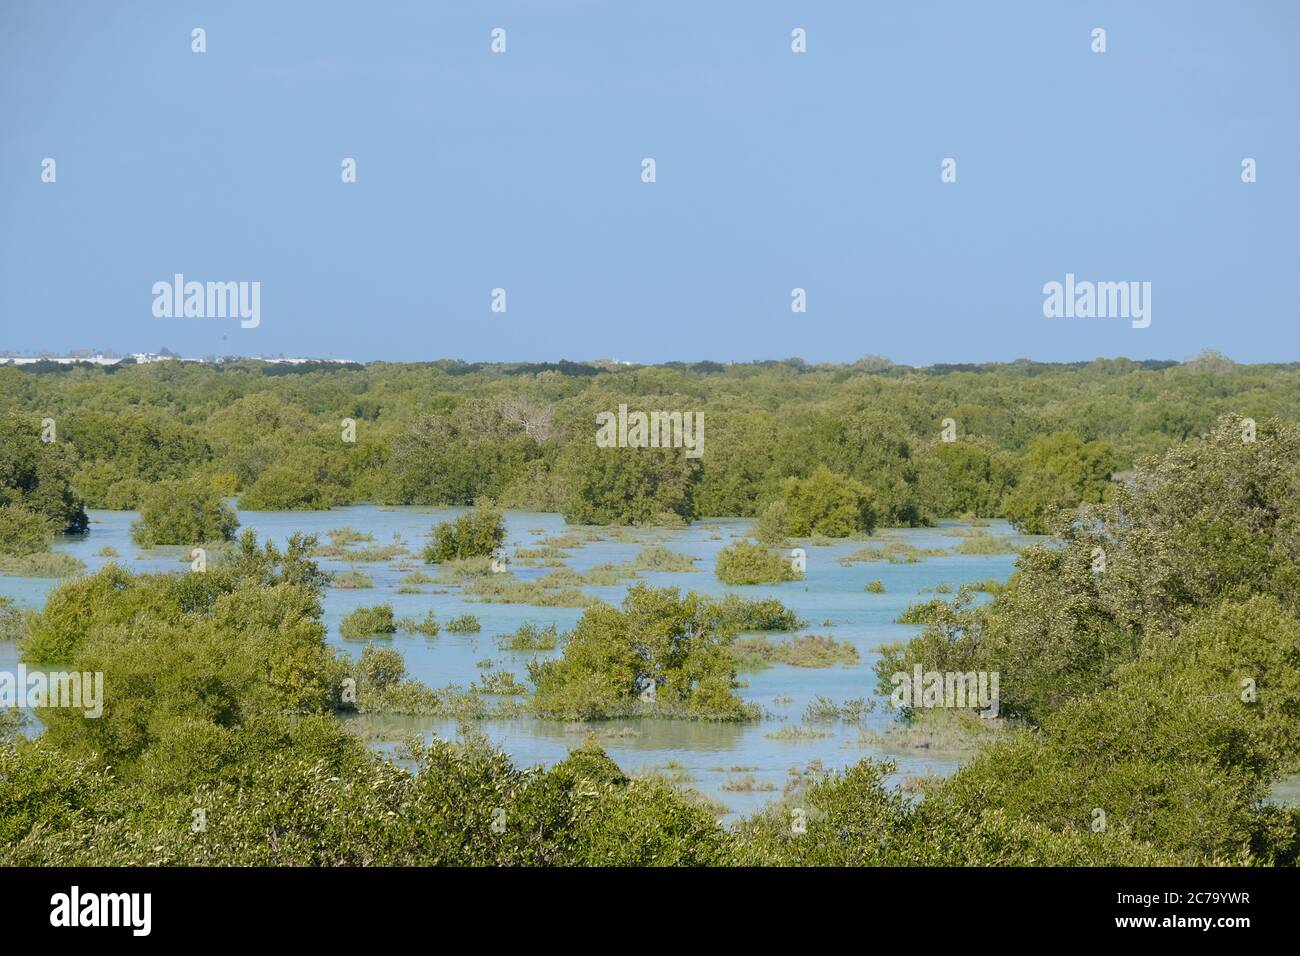 View of Mangrove Trees at Yas Island Abu Dhabi Stock Photo